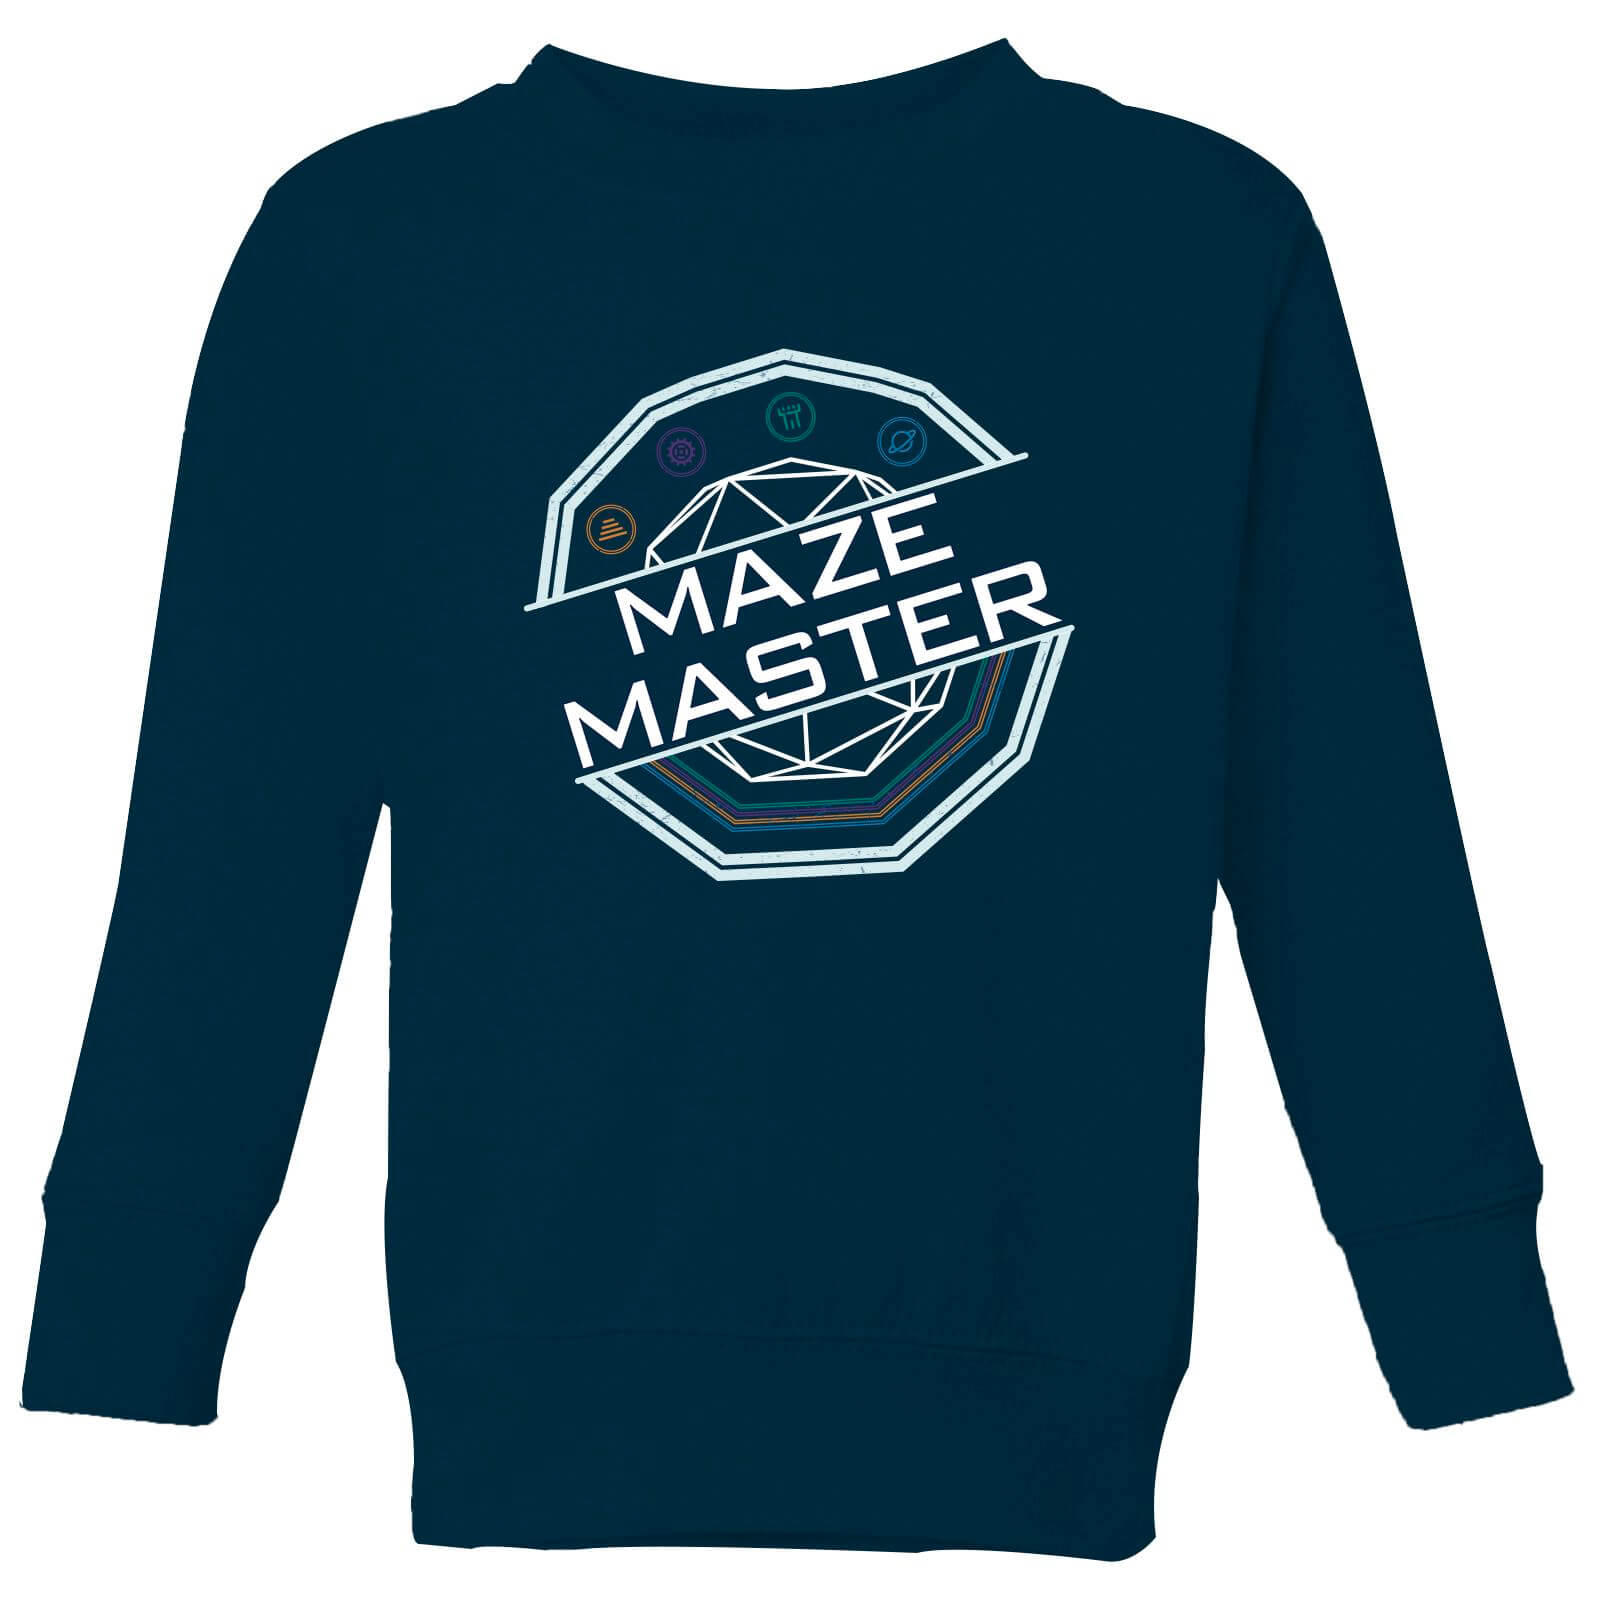 Crystal Maze Maze Master Kids' Sweatshirt - Navy - 9-10 Years - Navy